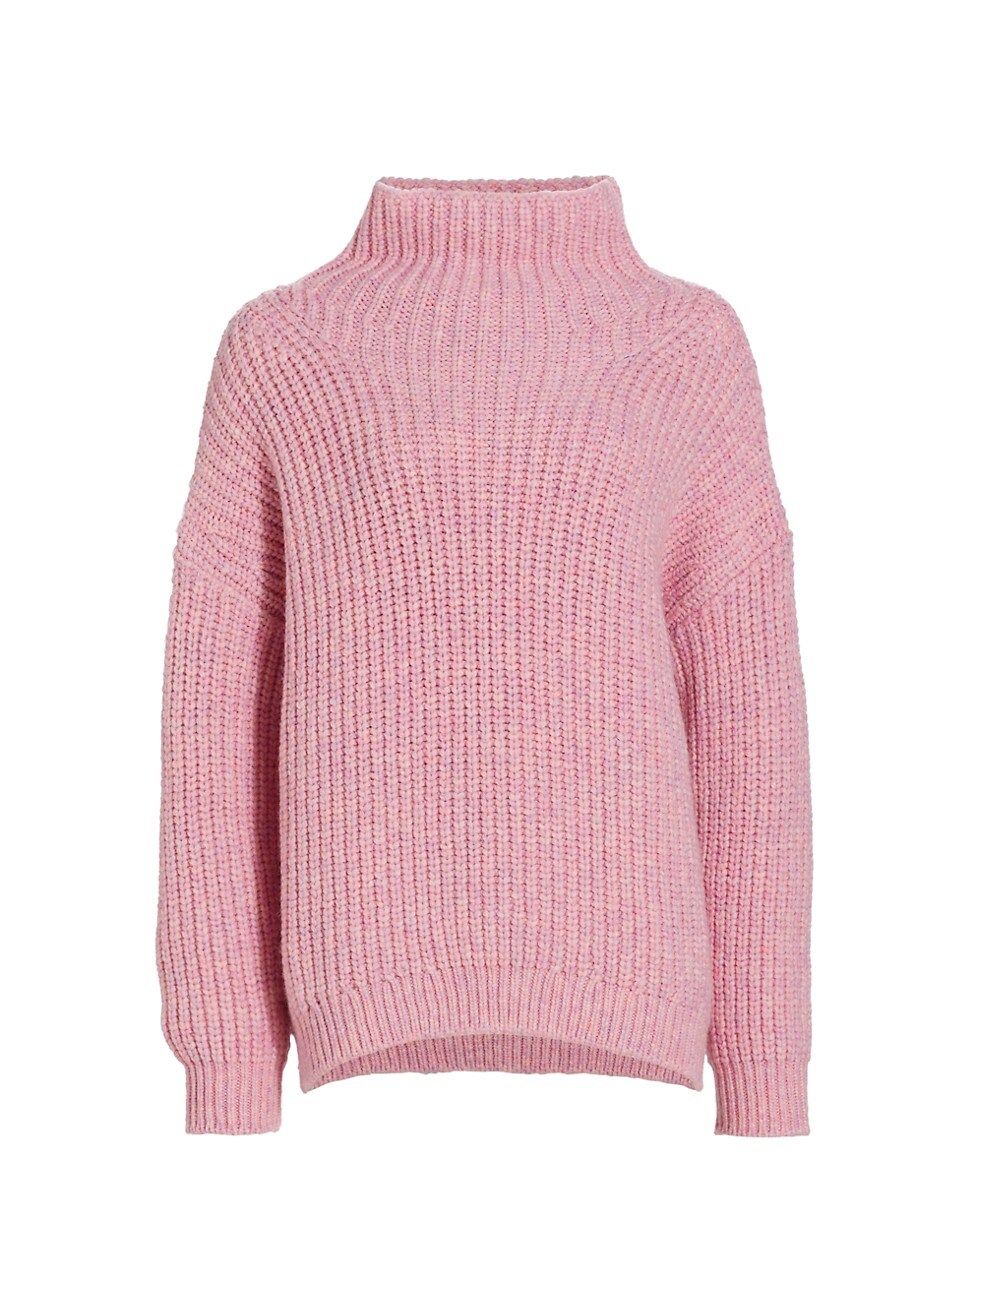 Iris Knit Turtleneck Sweater | Saks Fifth Avenue